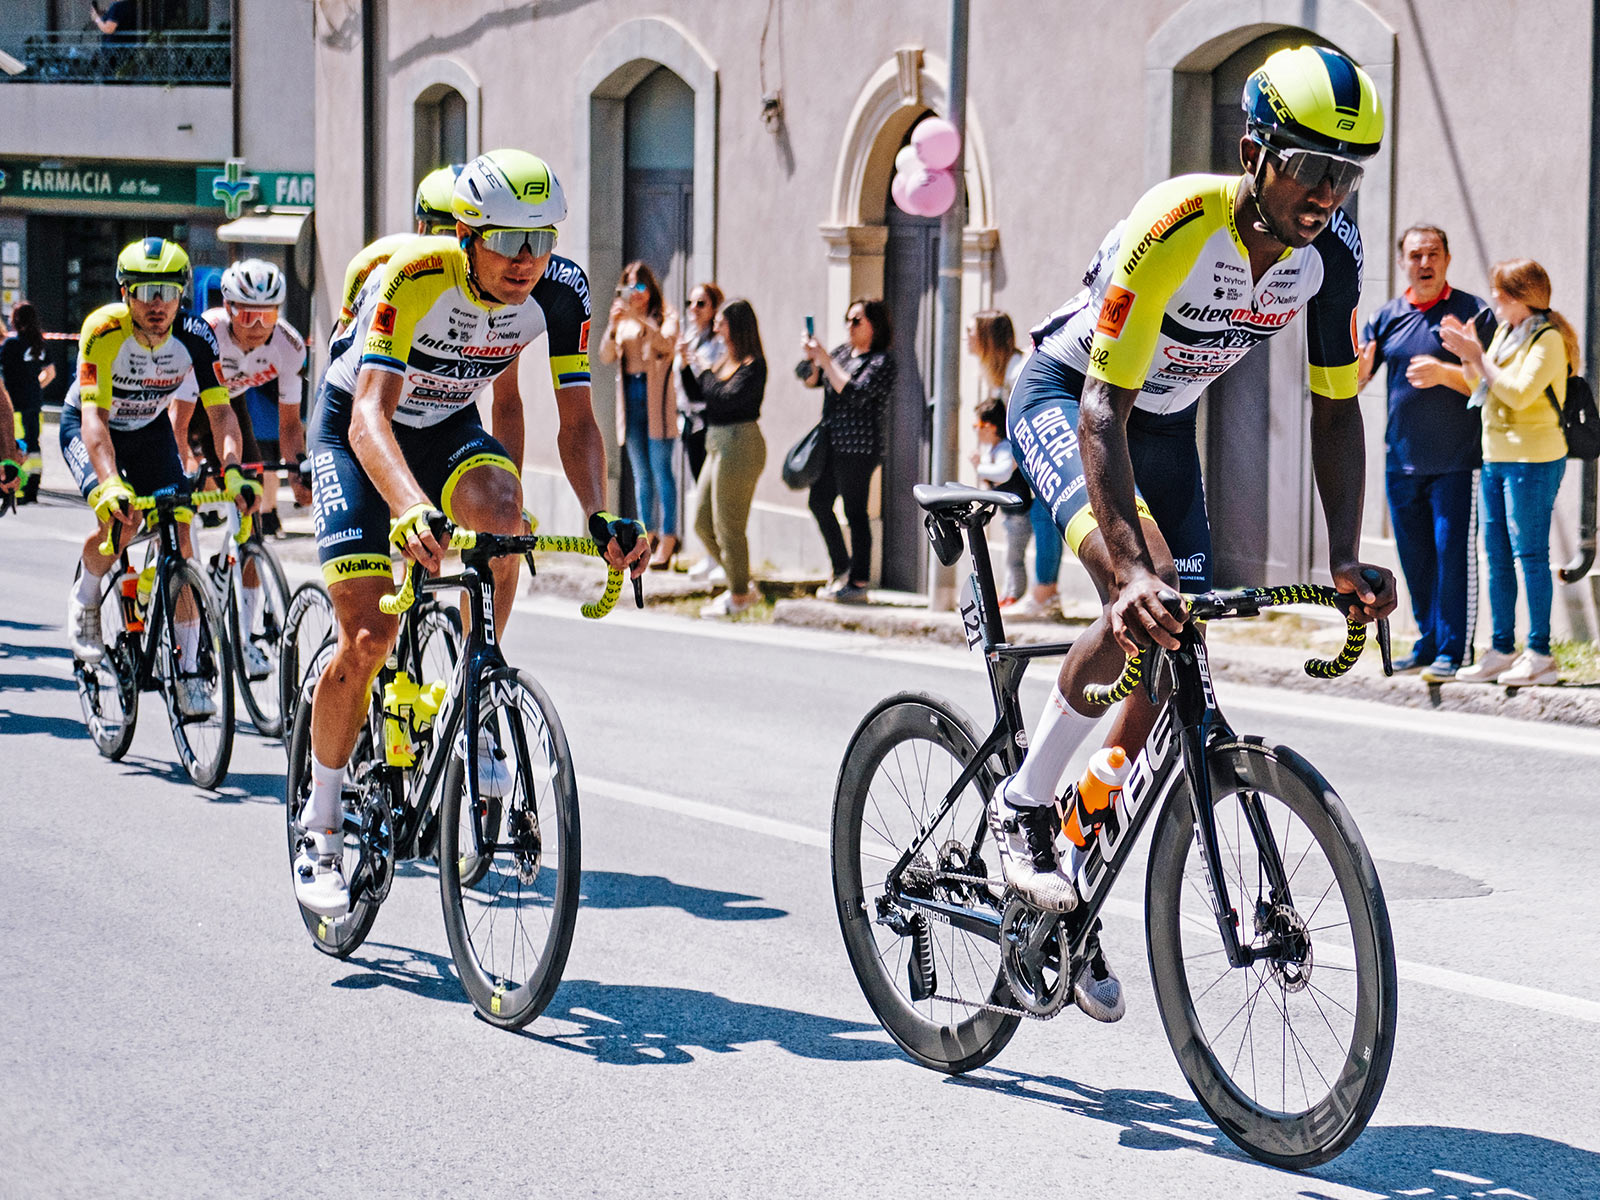 CUBE Litening C:68X SLT TE, Intermarché-Wanty-Gobert, Biniam Girma, 2022 Giro d'Italia photo by Alessandro Volders - Cyclingmediaagency, Stage 5